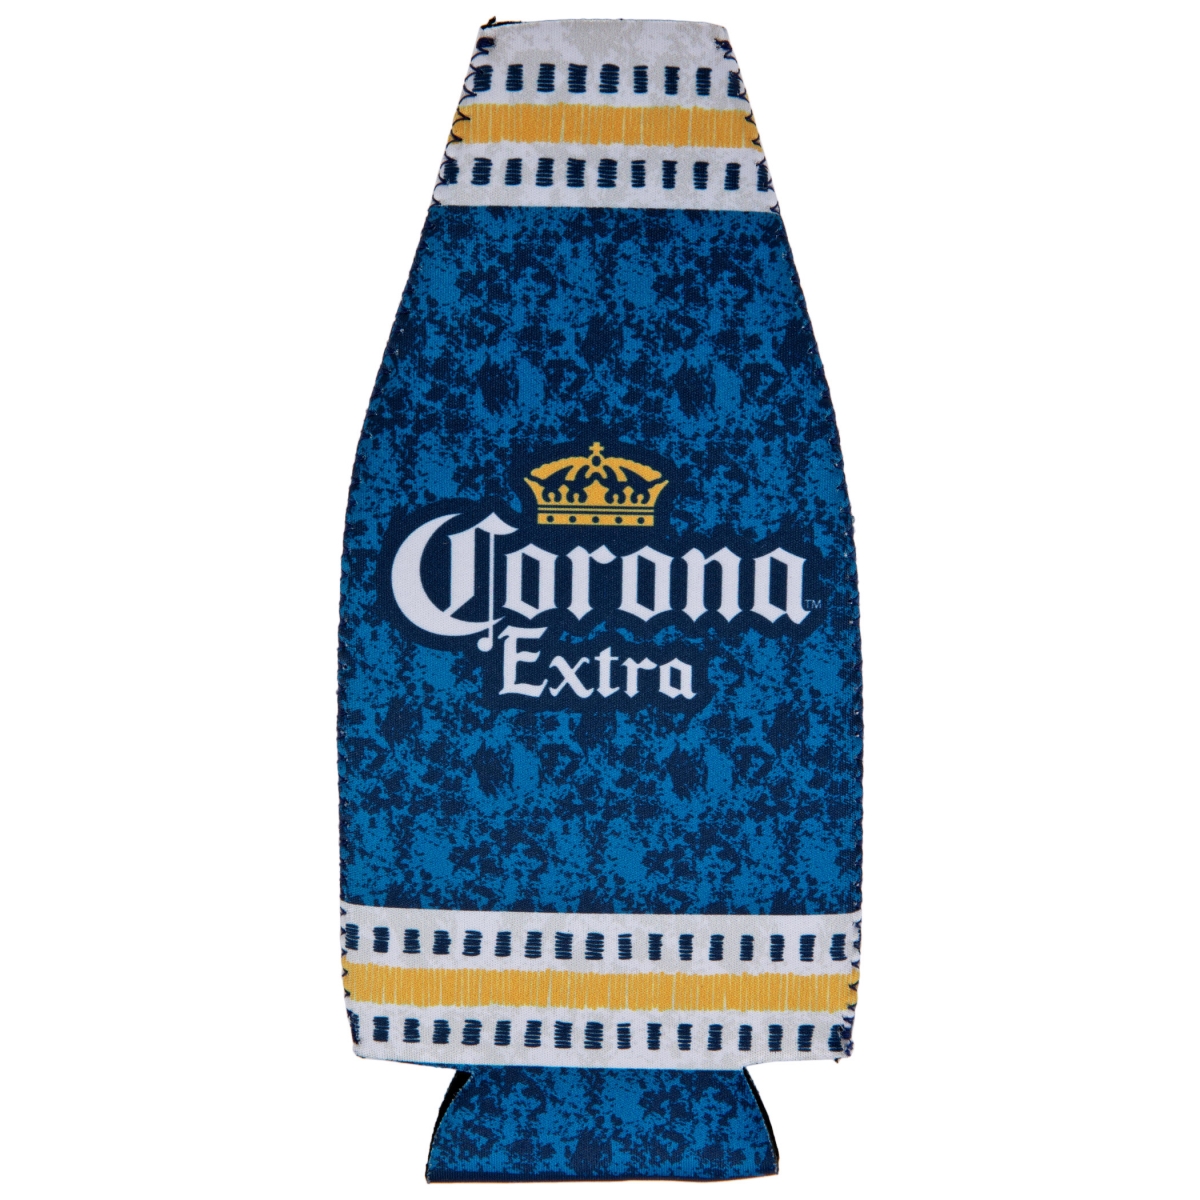 Picture of Corona Extra 814044 Corona Extra Vintage Label Bottle Cooler